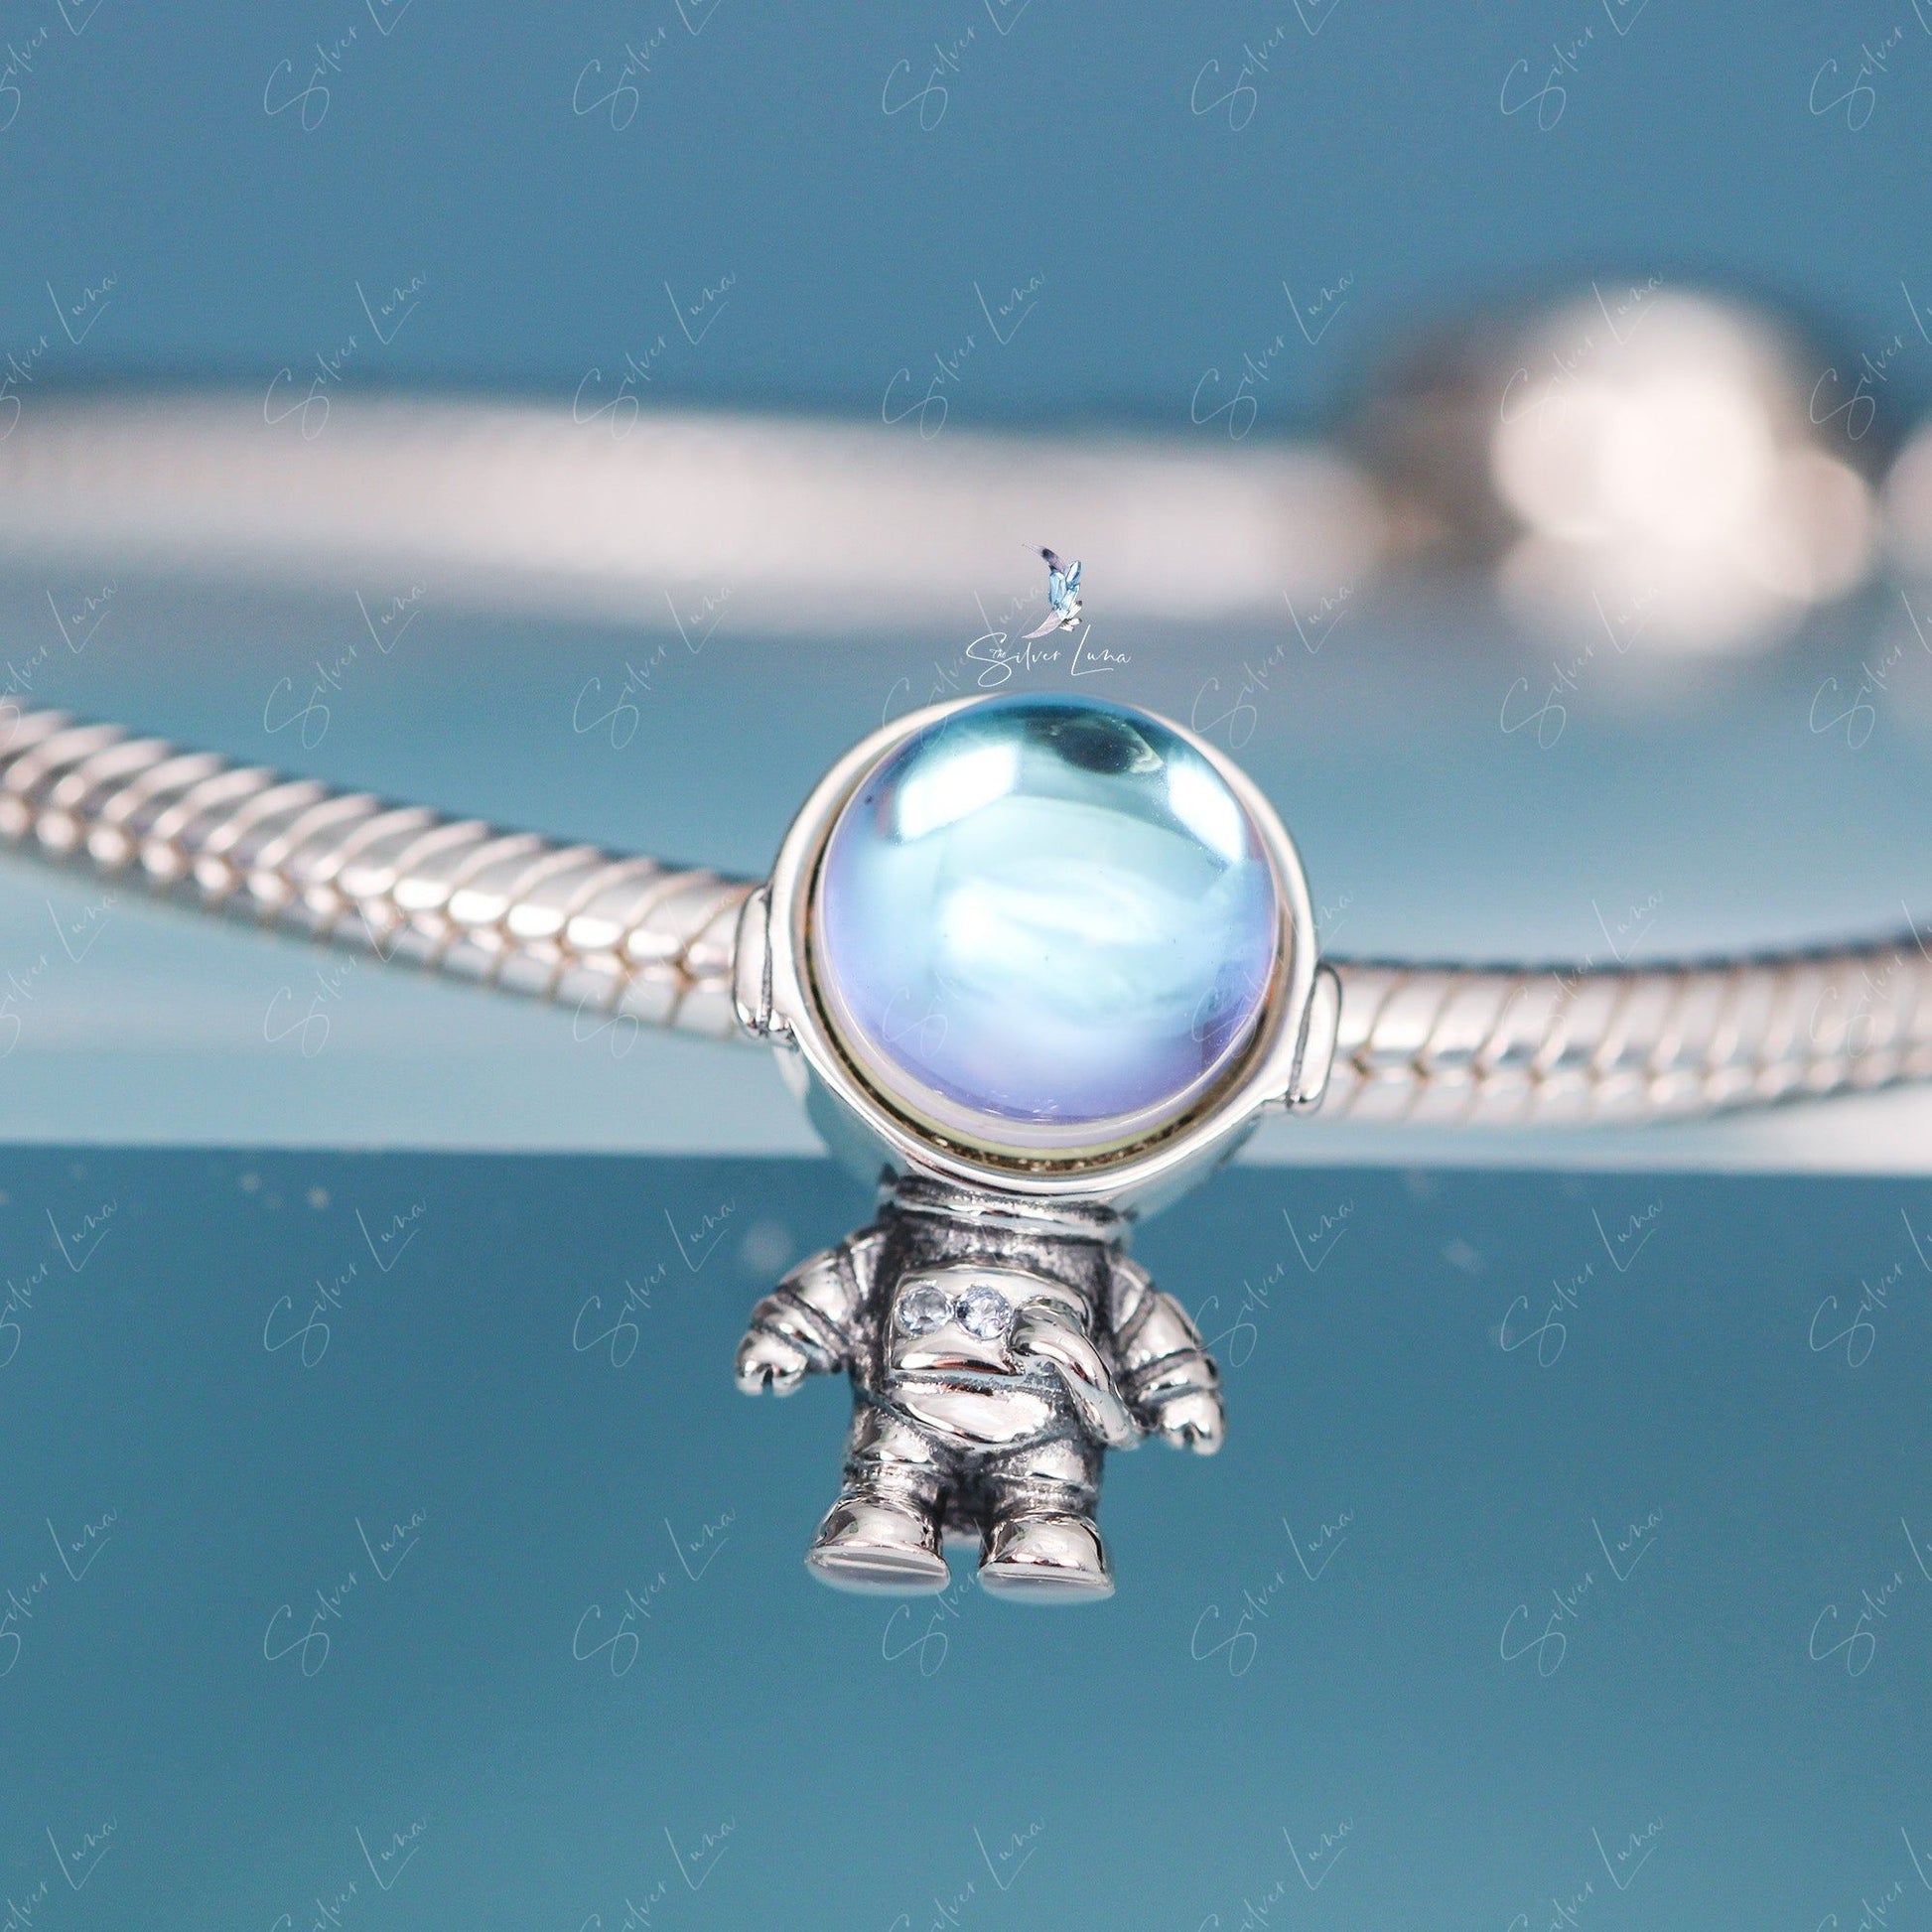 astronaut bead charm